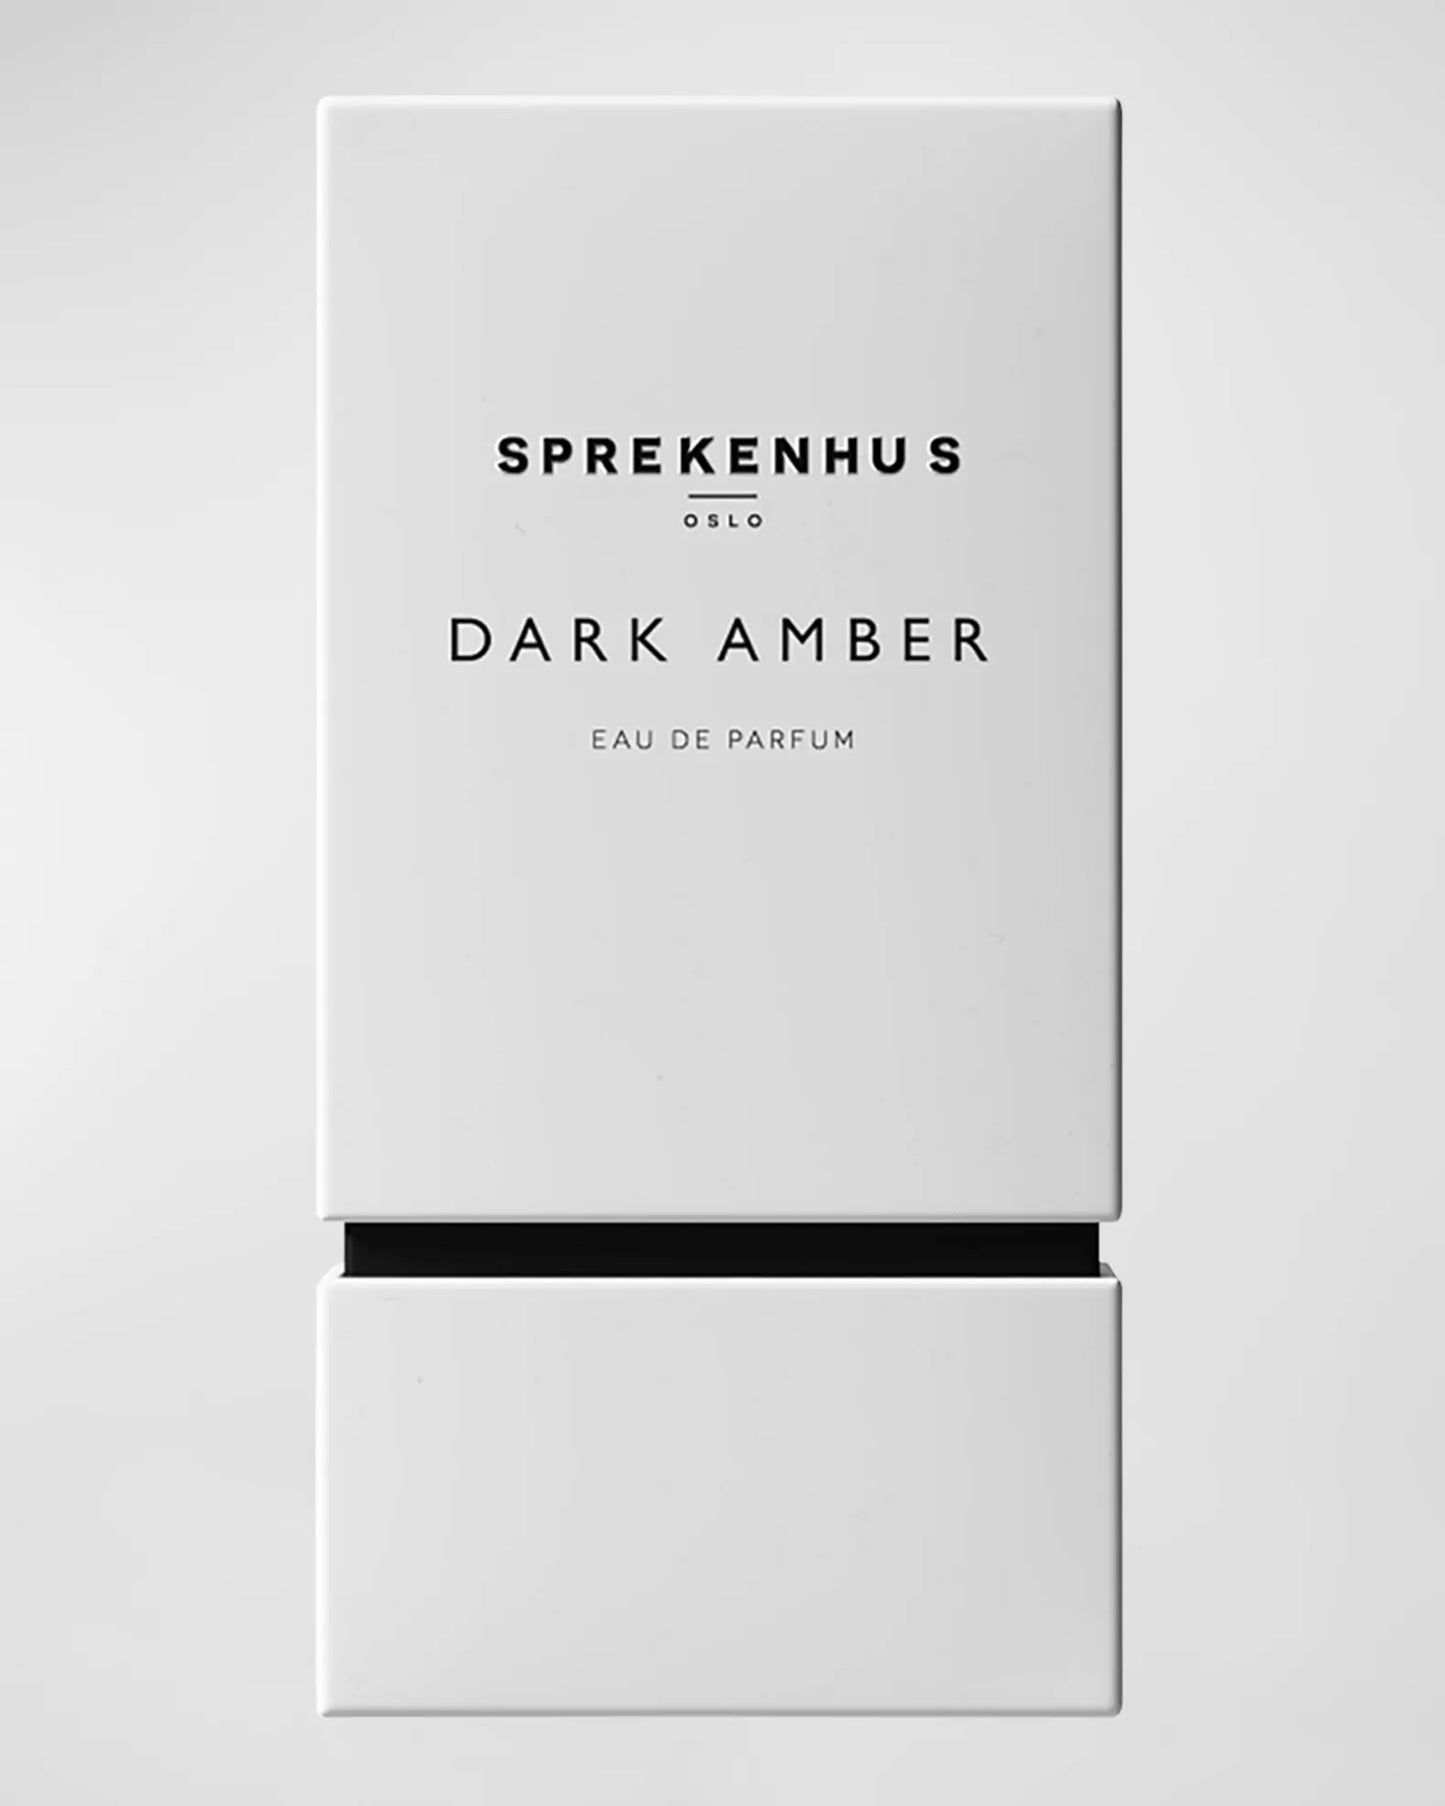 SPREKENHUS DARK AMBER EAU PARFUM 3.4 oz. - $254.00